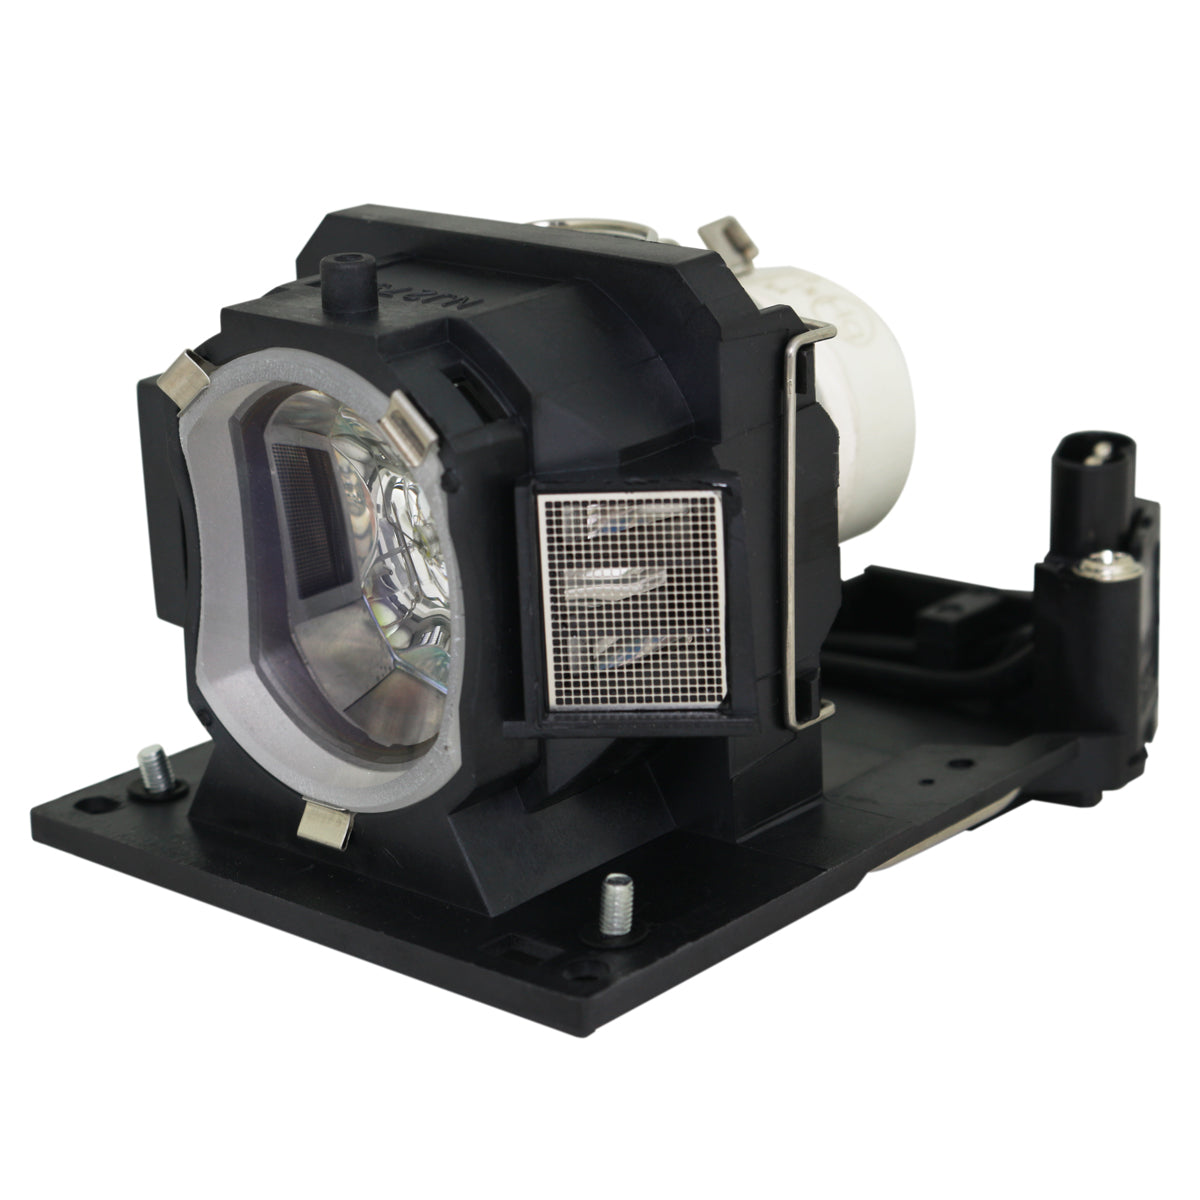 Hitachi DT01411 Ushio Projector Lamp Module